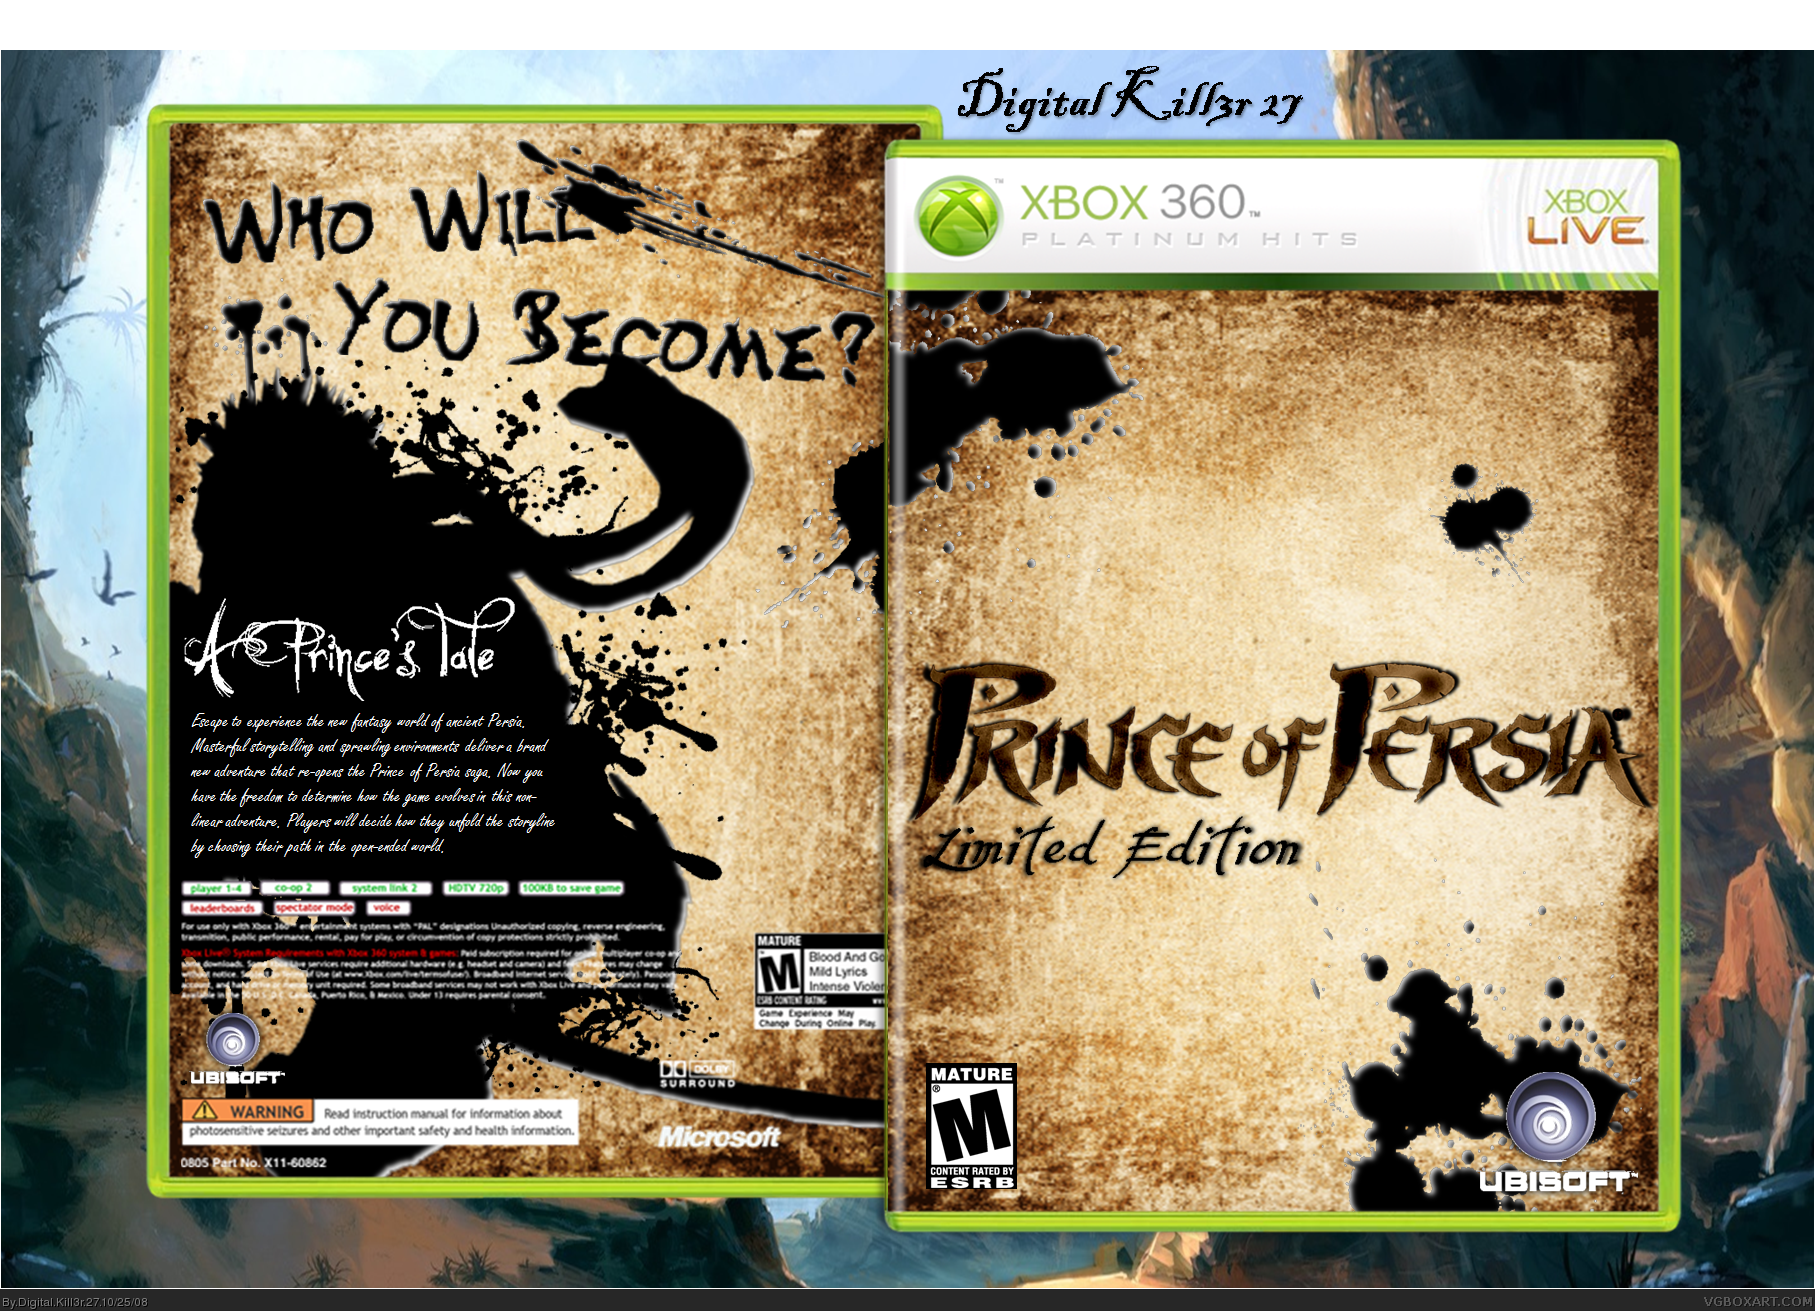 Prince of Persia box cover